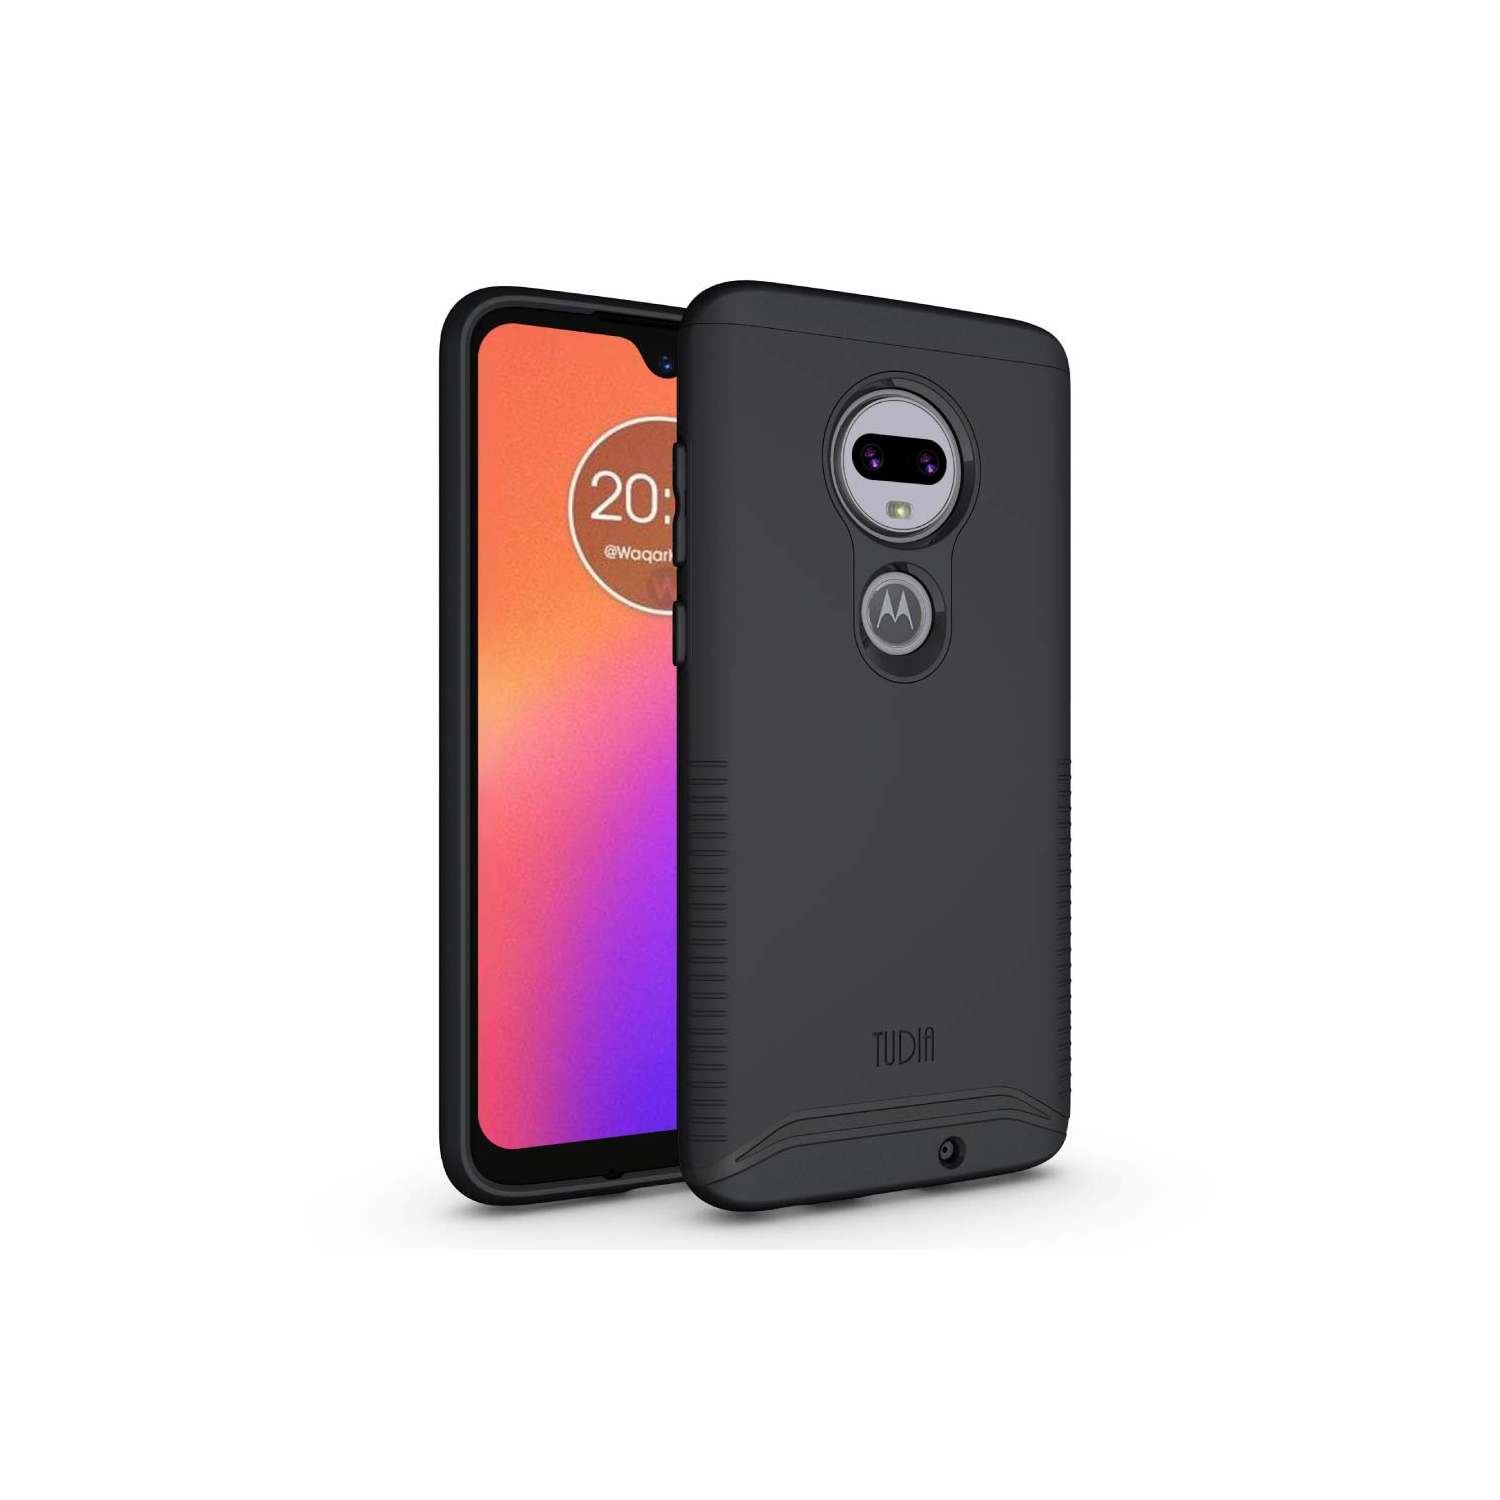 TUDIA Slim-Fit [Merge] Dual Layer Extreme Drop Protection/Rugged Phone Case for Motorola Moto G7/G7 Plus (Matte Black)